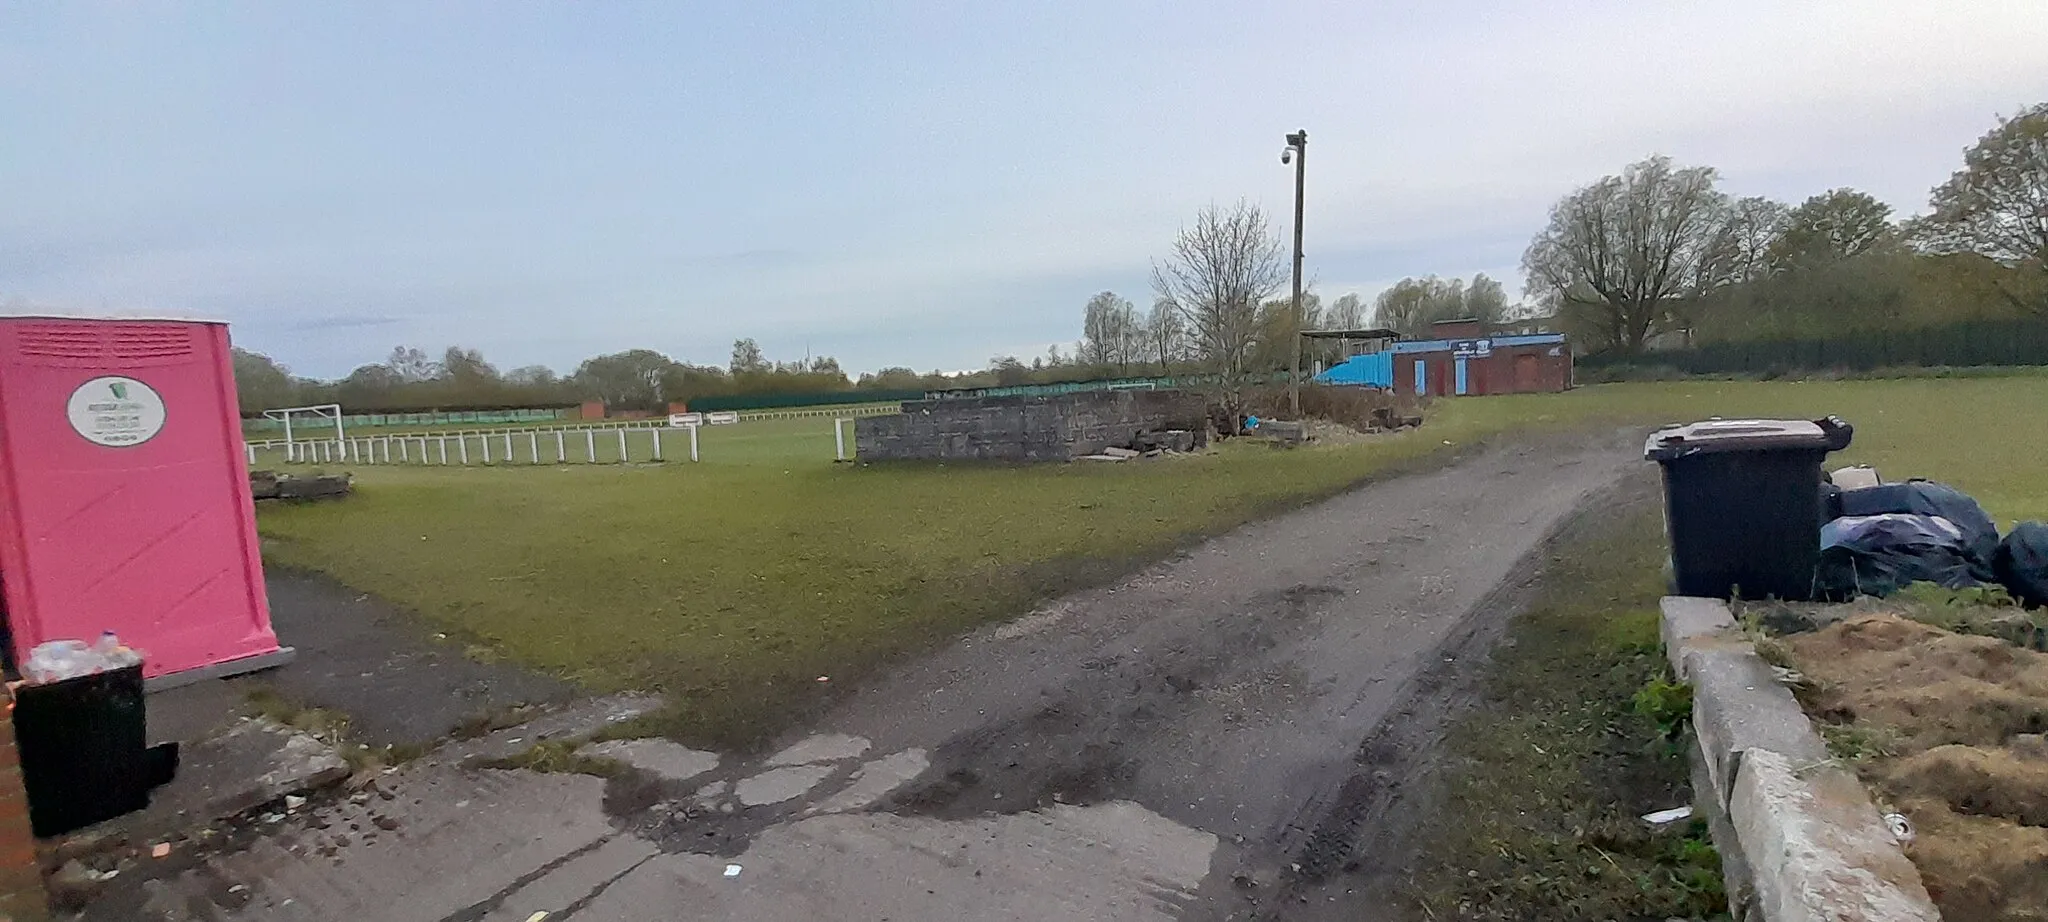 Photo showing: Derwent Park Stadium, home of Annfield Plain Football Club.